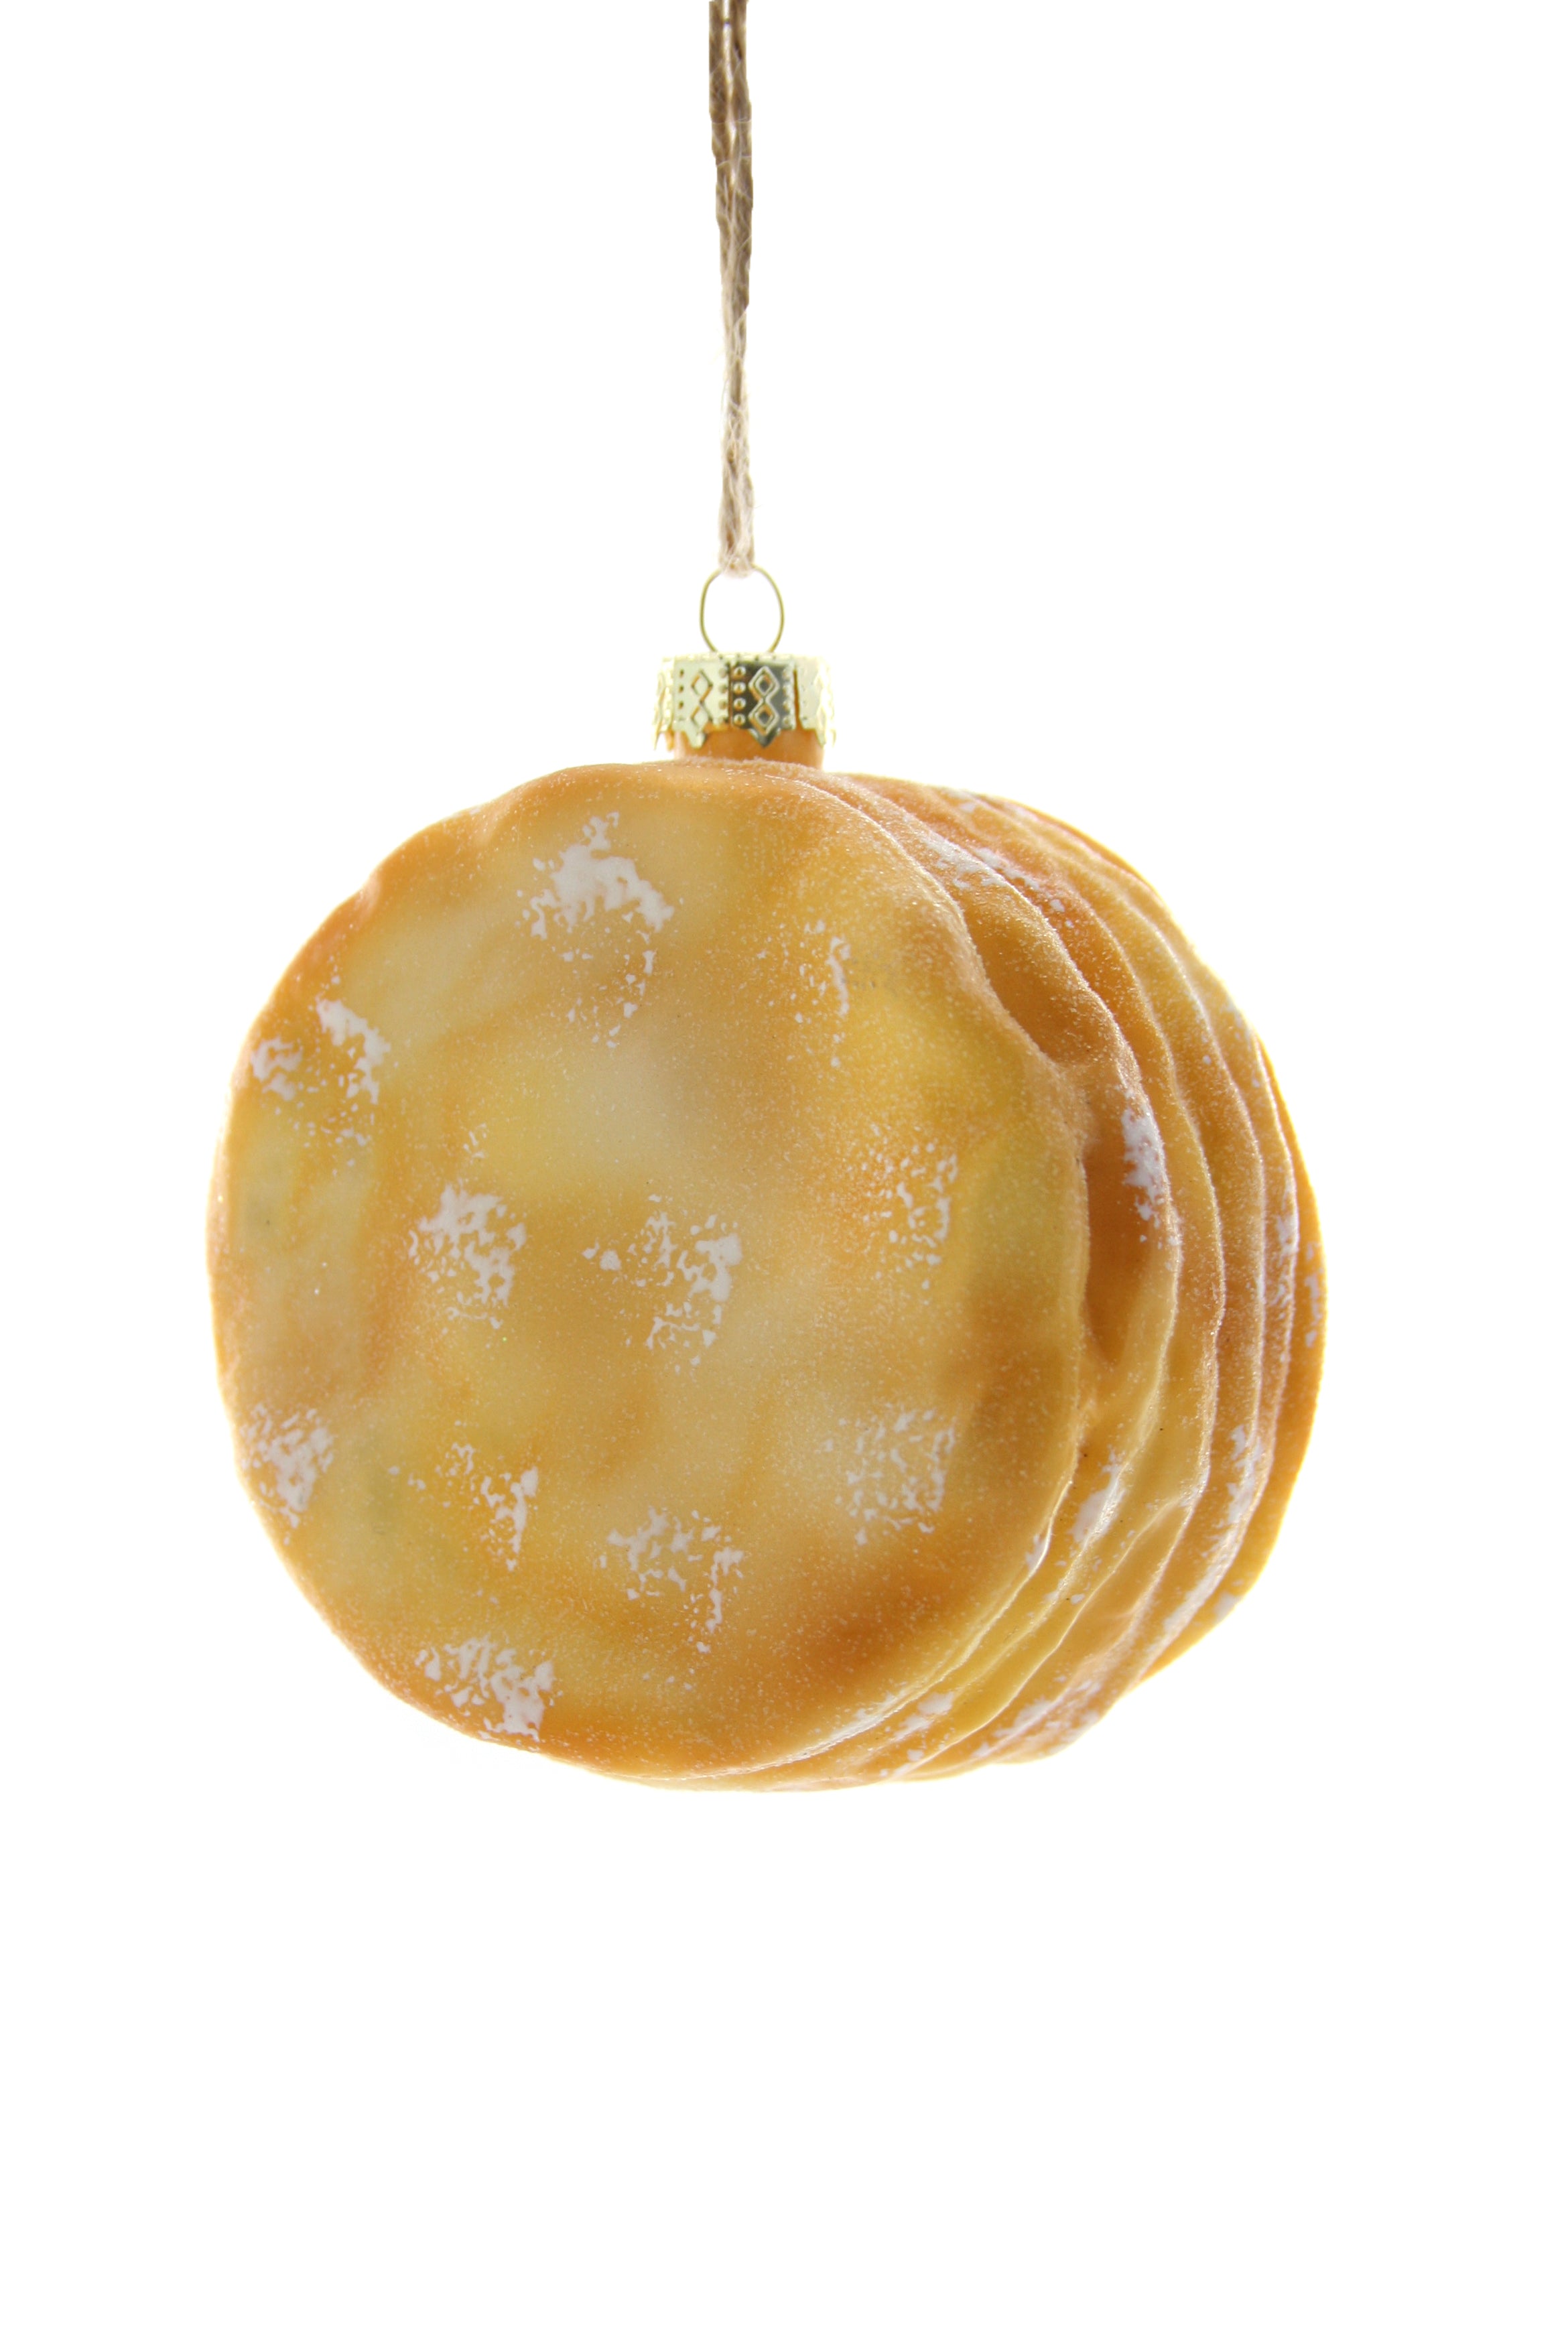 Buttermilk Biscuit Ornament